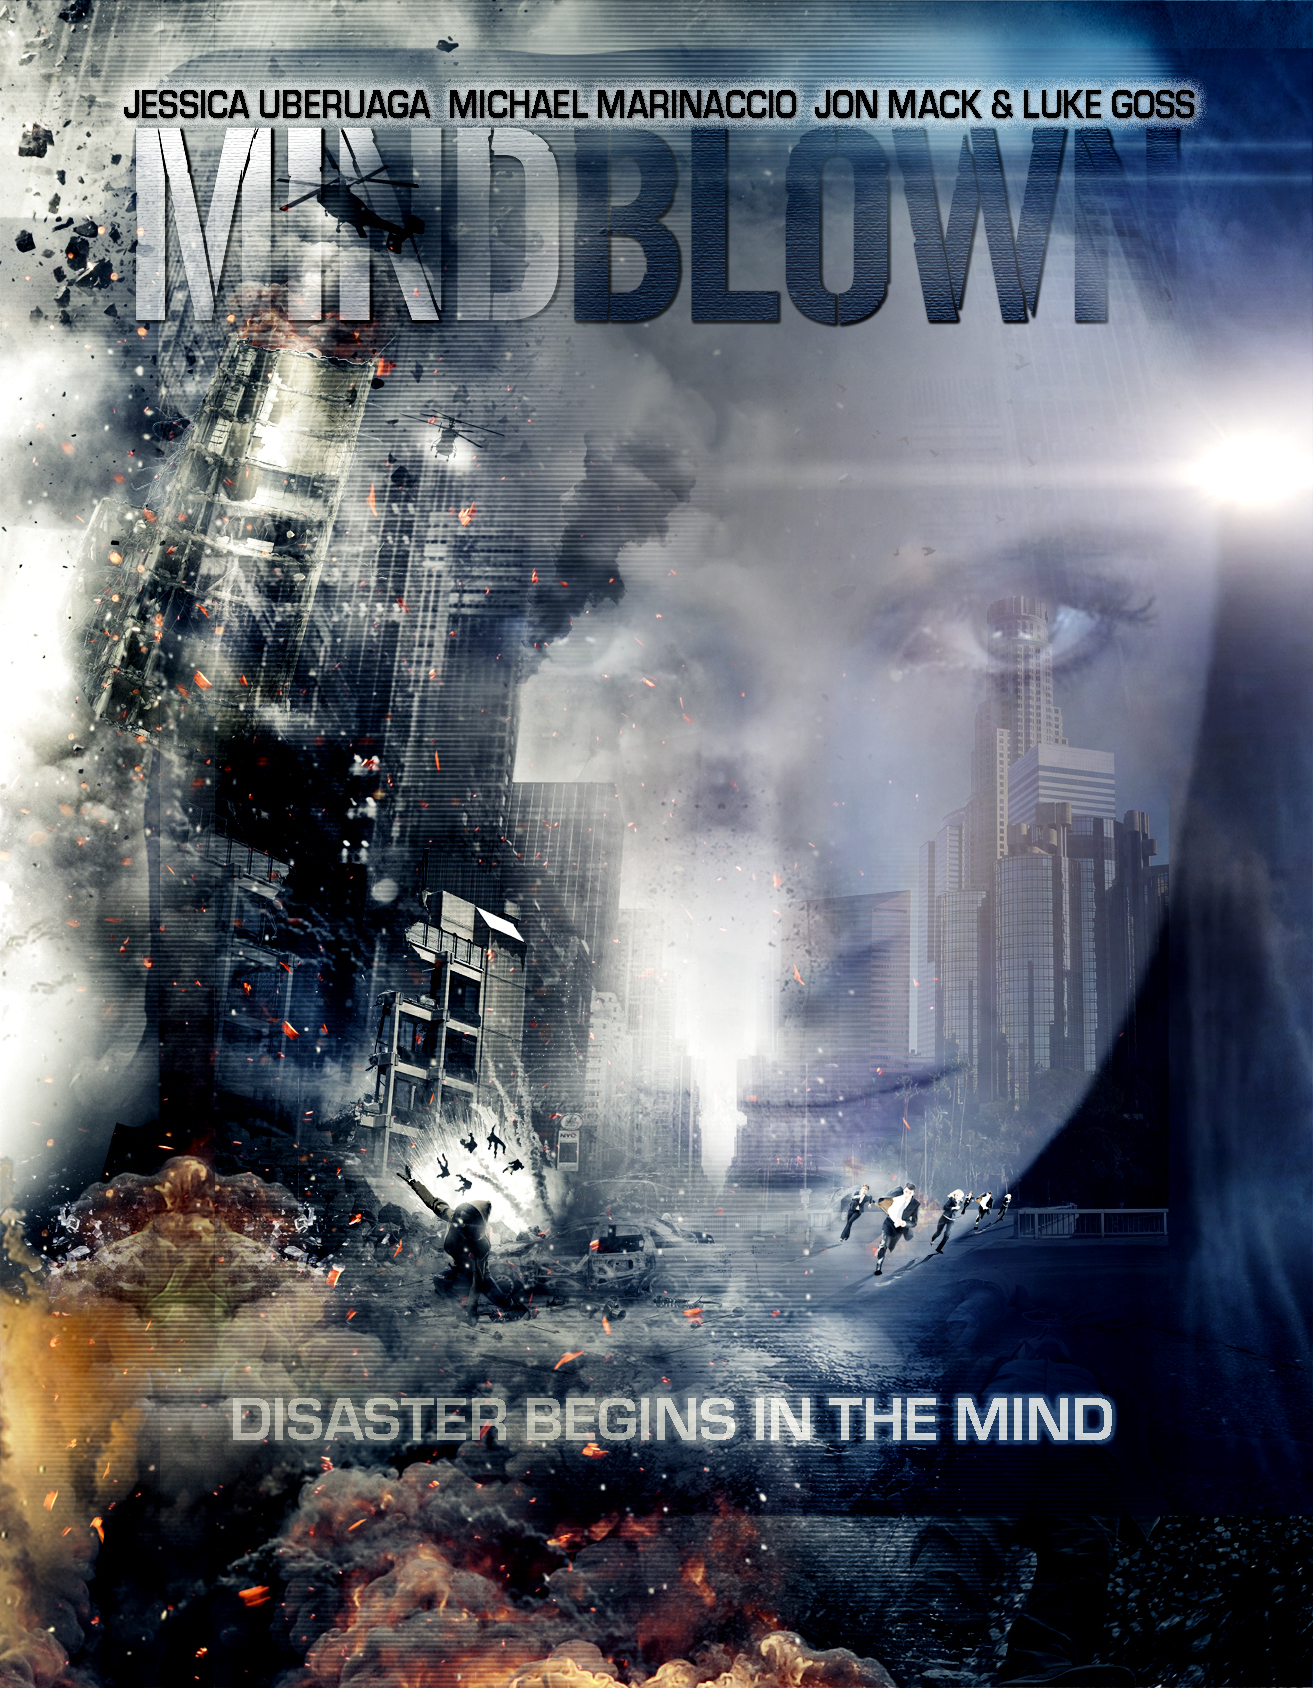 Mind Blown (2016) Jessica Uberuaga